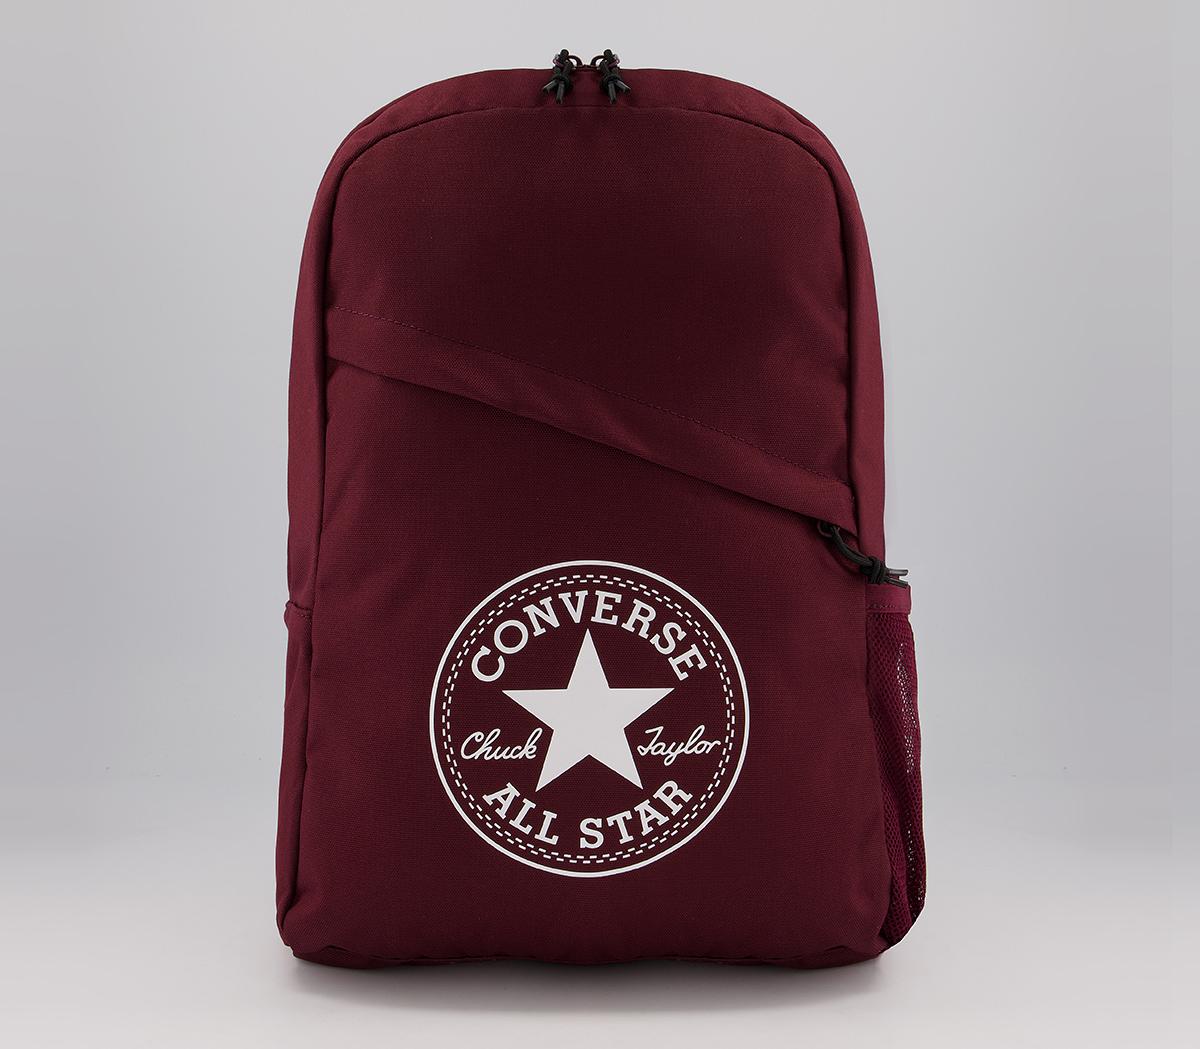 Pelham Converse Schoolpack XL Burgundy - Backpacks and Bags